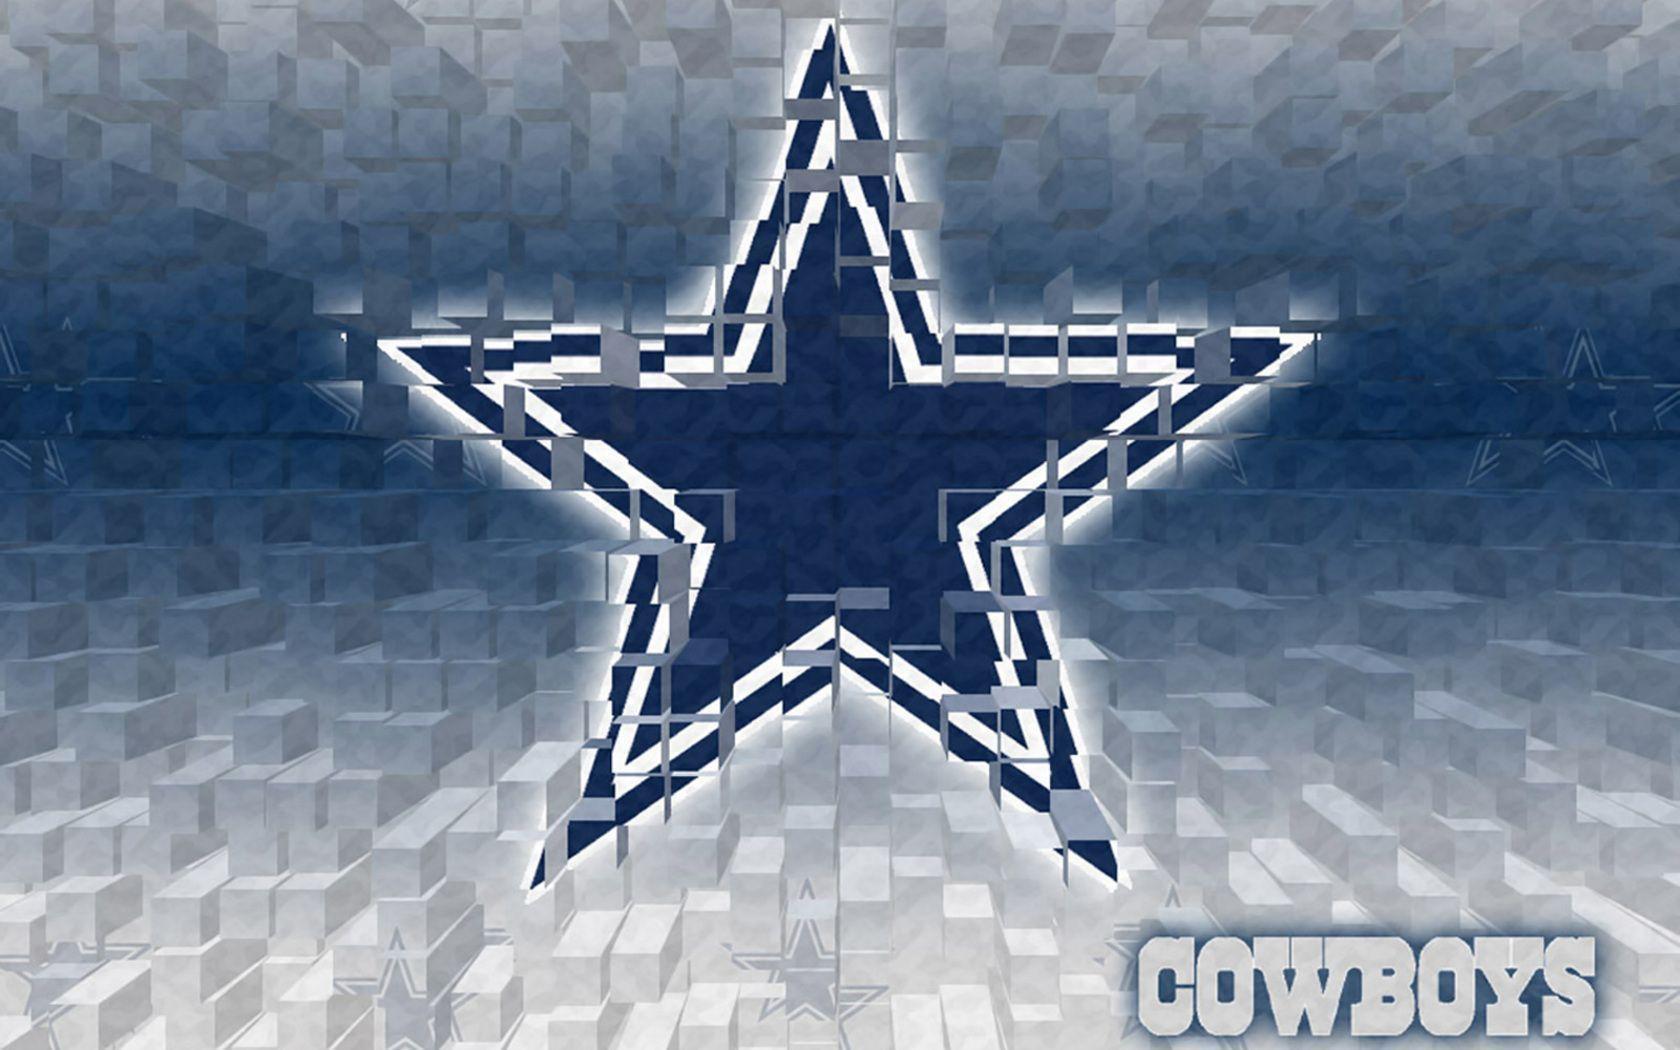 Dallas Cowboys Background For Desktop